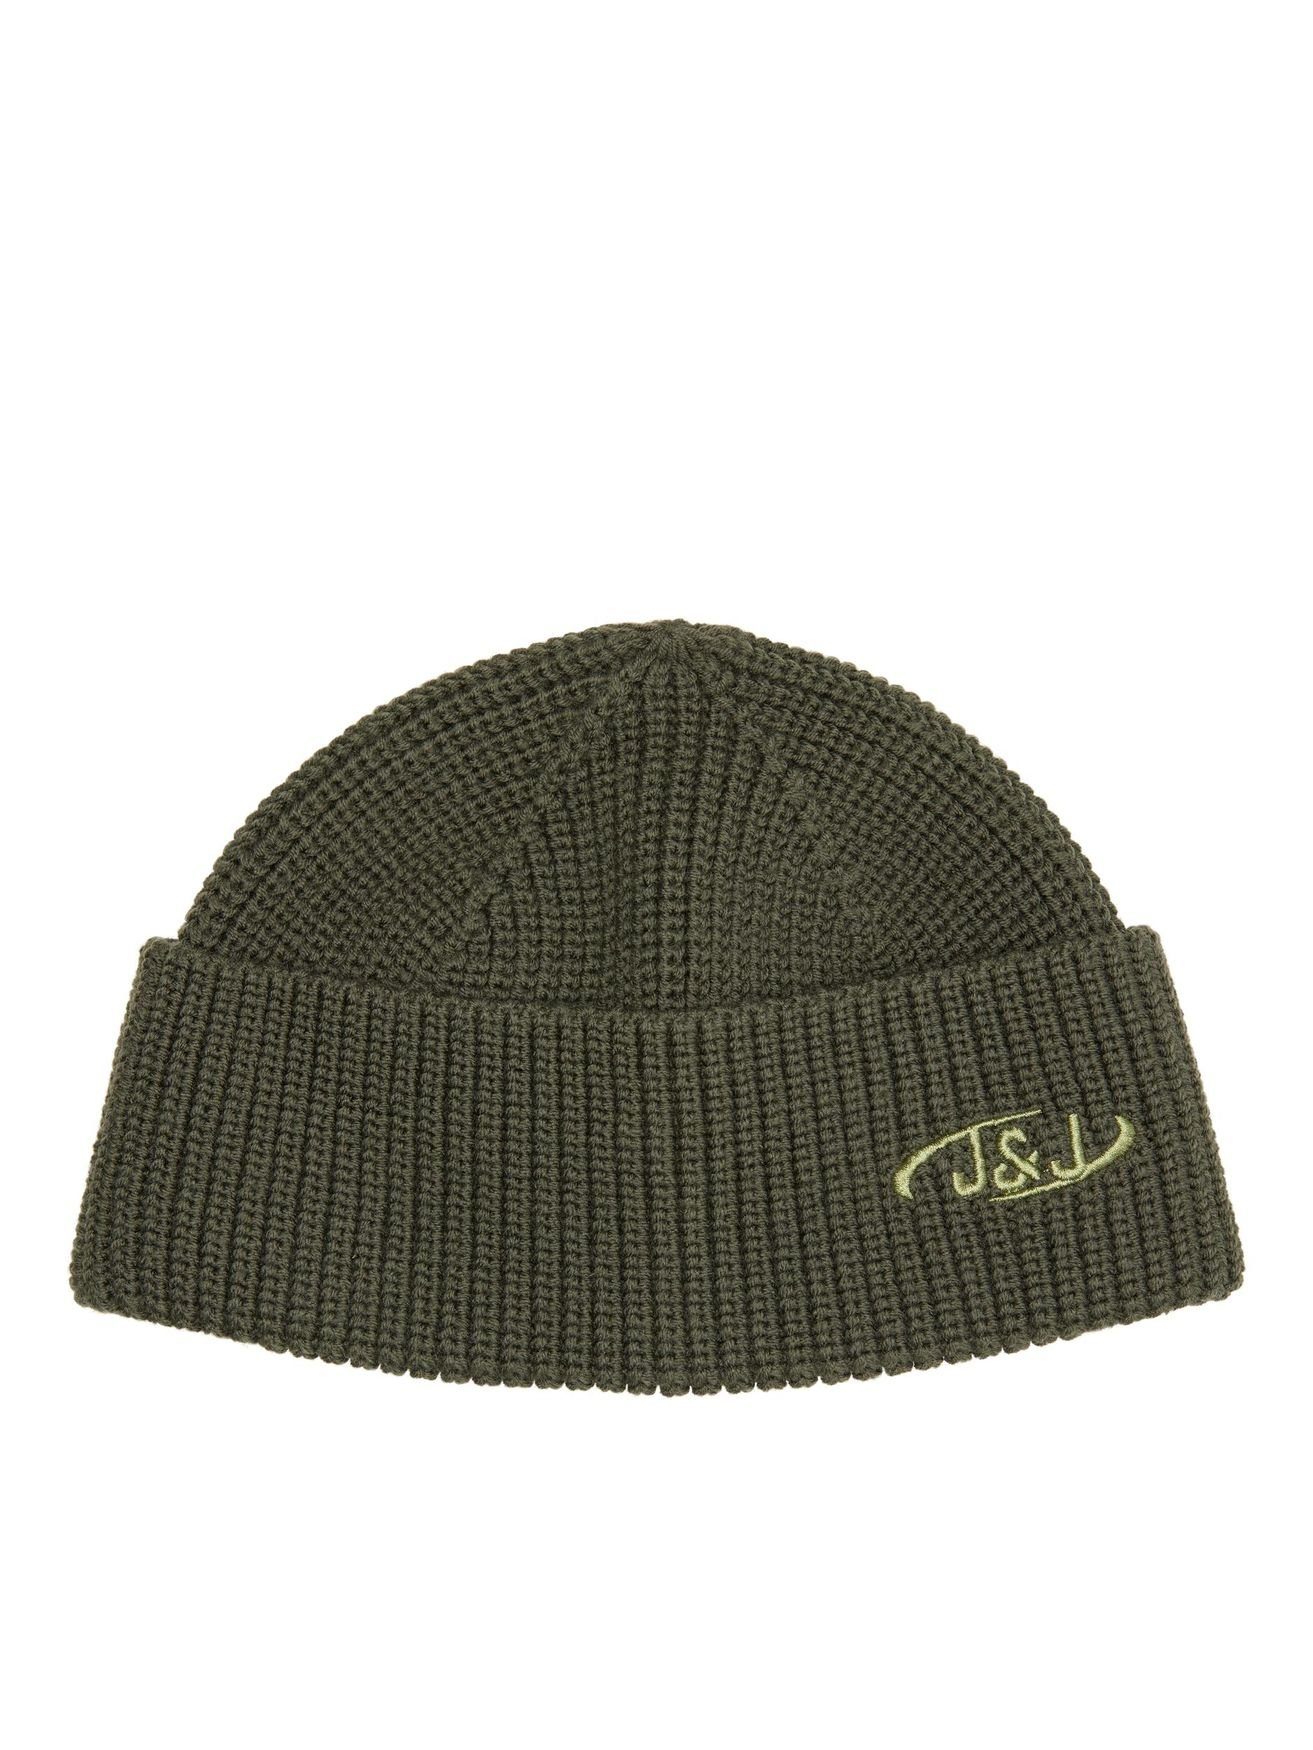 Jack & Jones Strickmütze Kurz Gerippte Mütze Winter Beanie Kopfbedeckung Recycelt JACAIR 4671 in Dunkelgrün | Strickmützen